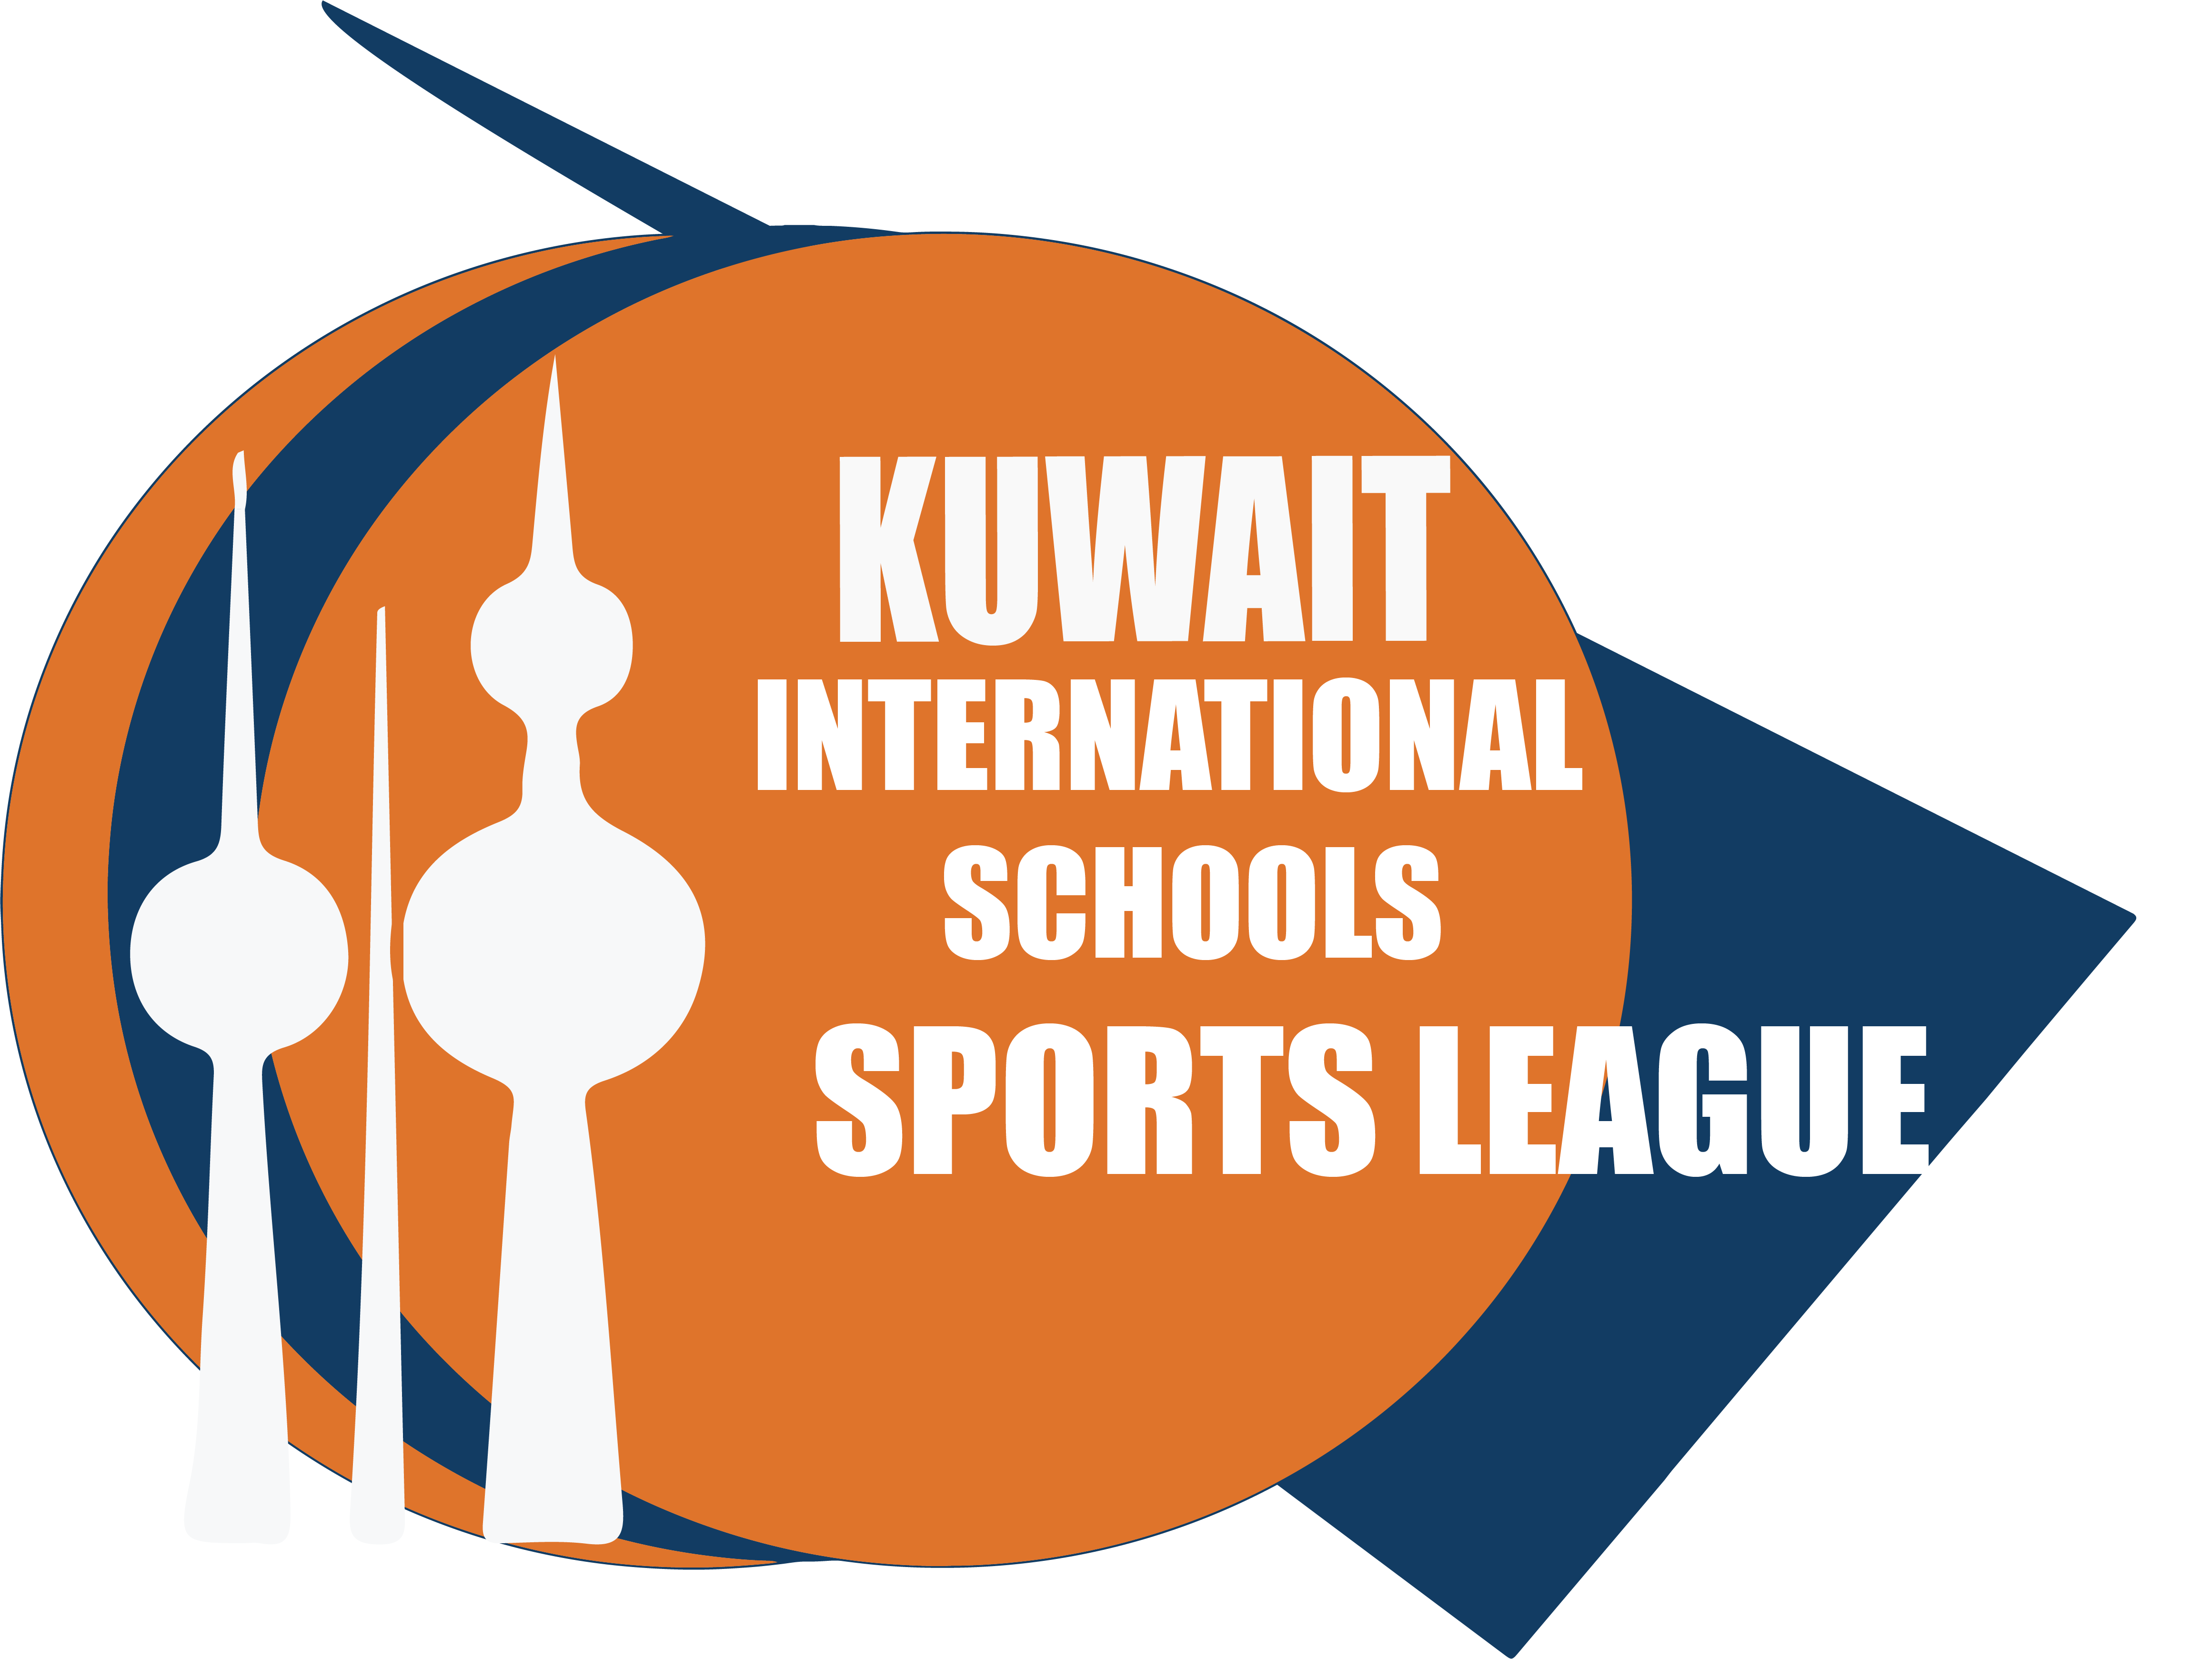 Kuwait International Schools Sports League logo